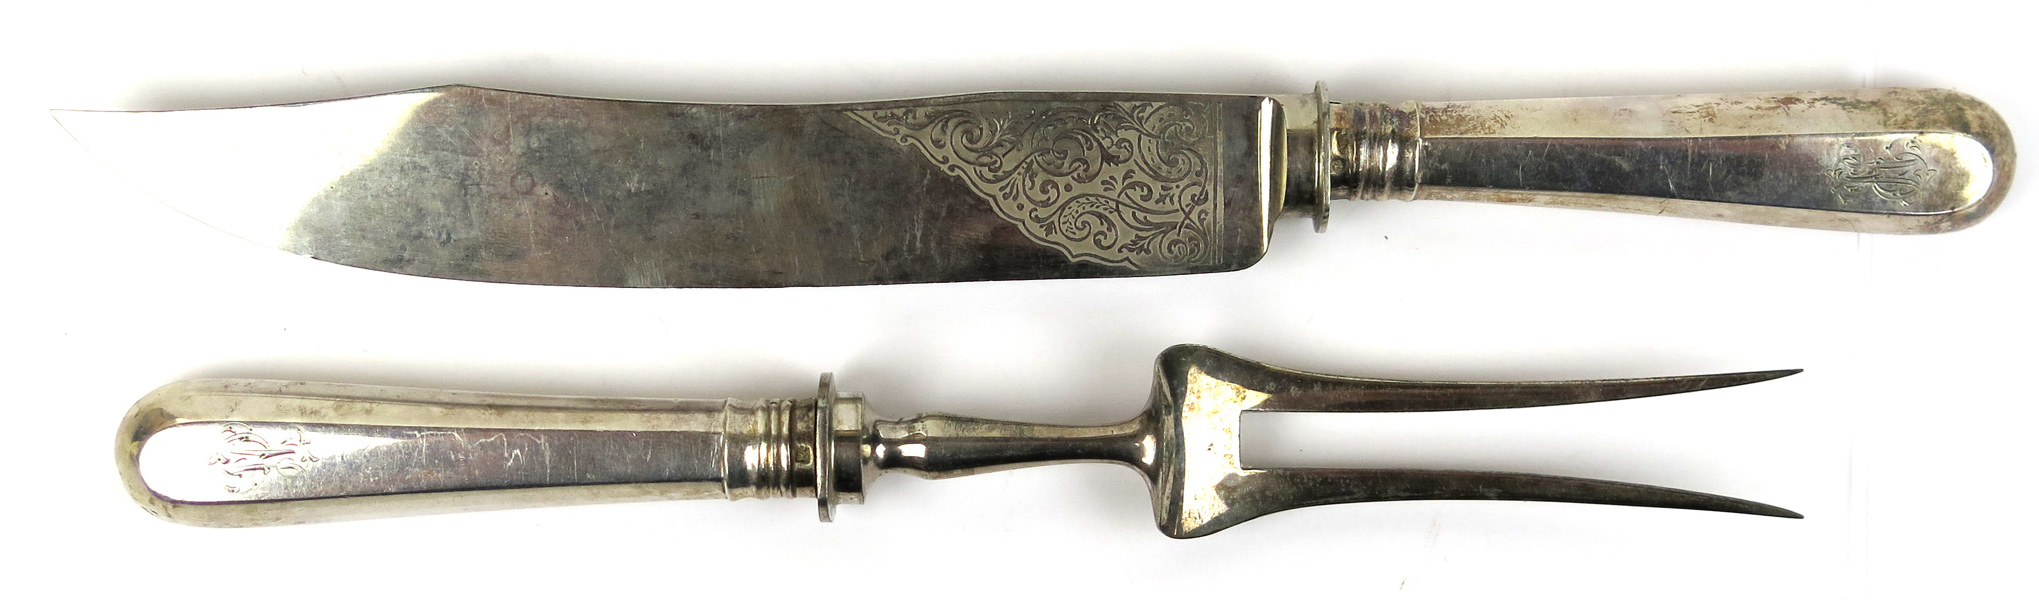 Trancherbestick, 1 par, silver med stålblad, Ryssland, 1800-tal, _4933a_lg.jpeg